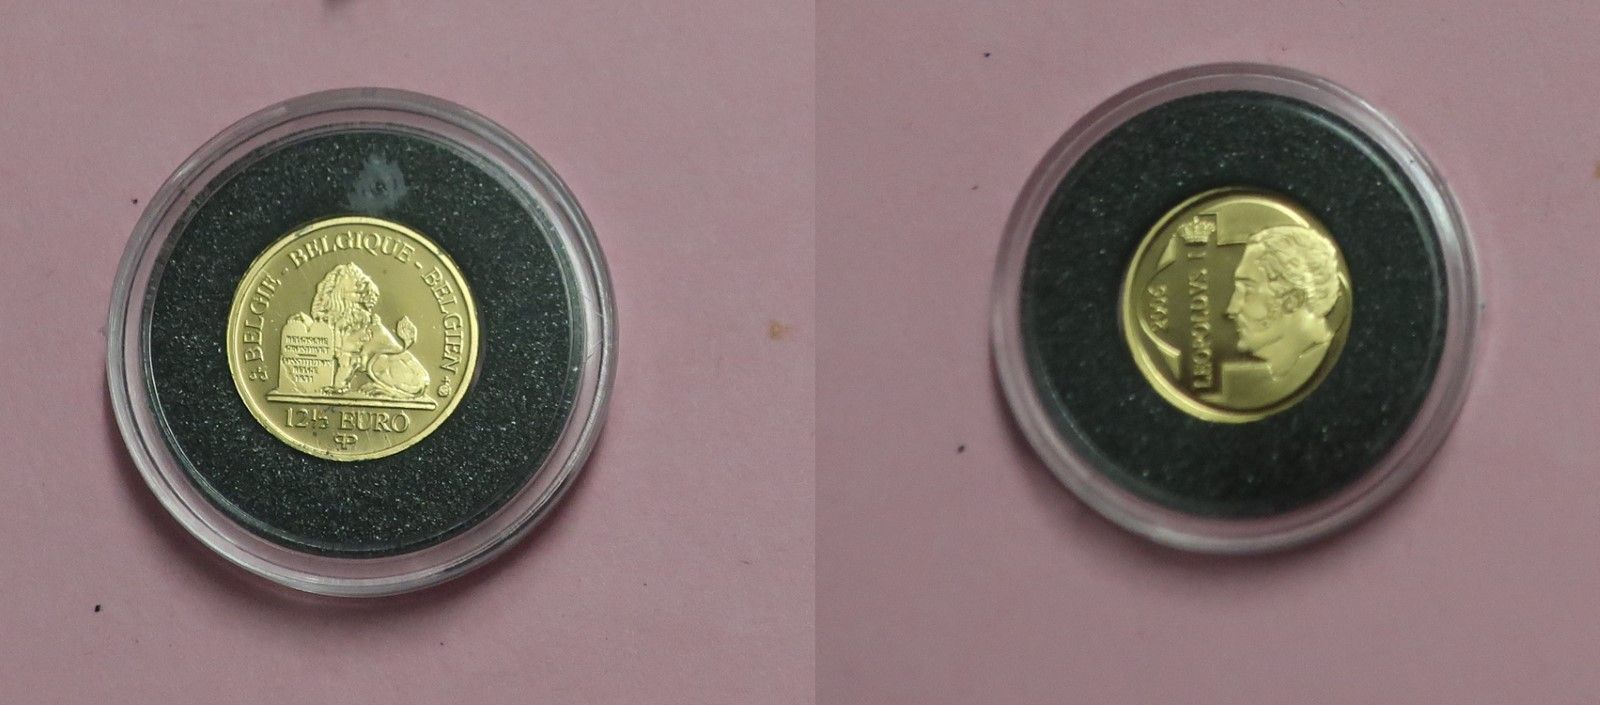 Null Gold coin Belgium,12 1/2 Euro, approx. 1.25 gram, 999 gold